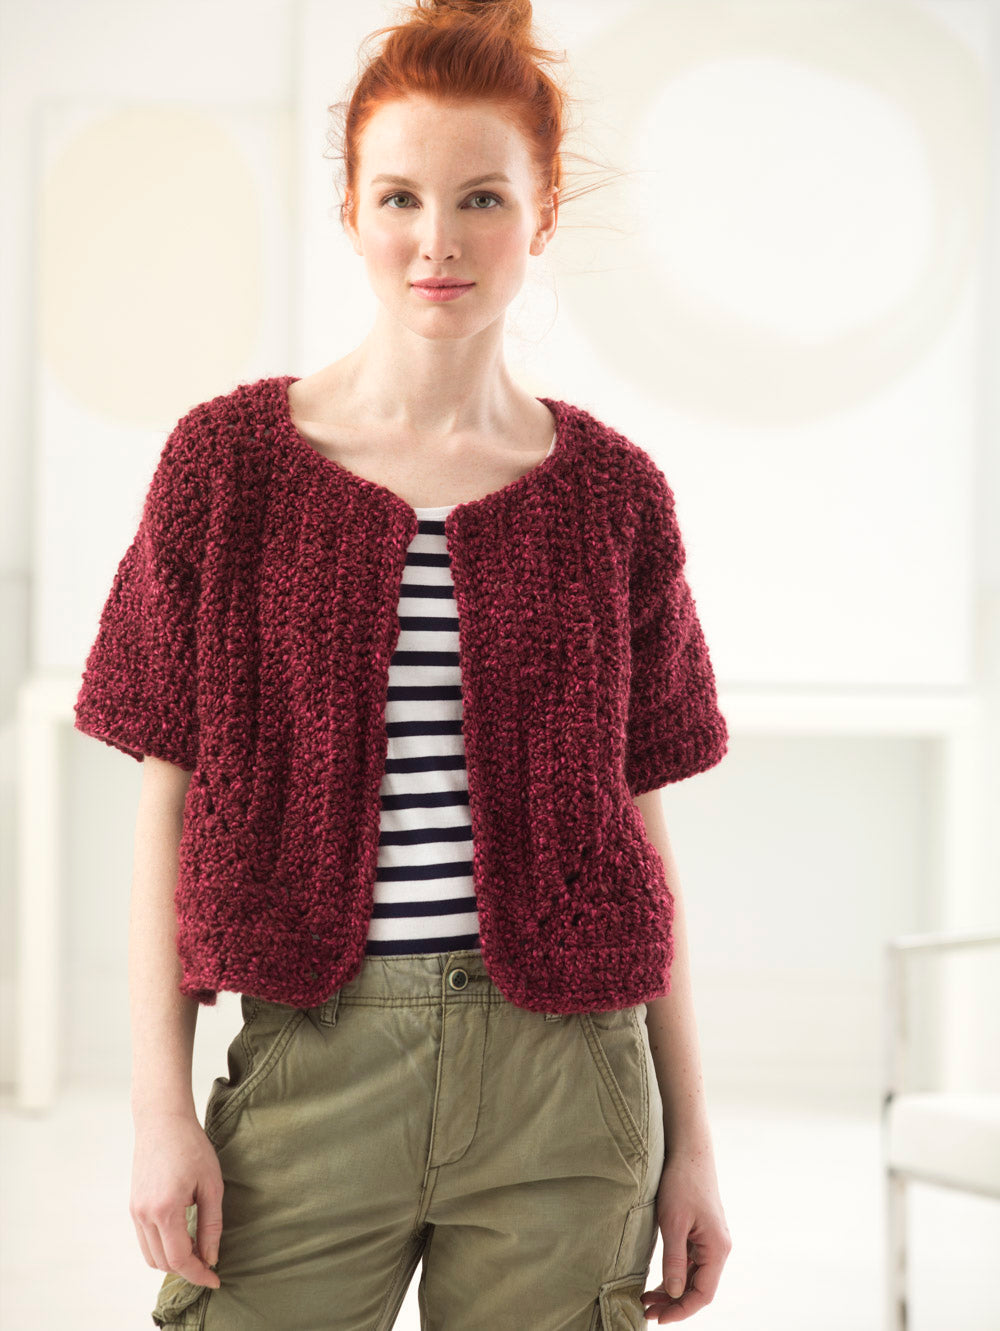 Chatsworth Jacket (Crochet) – Lion Brand Yarn